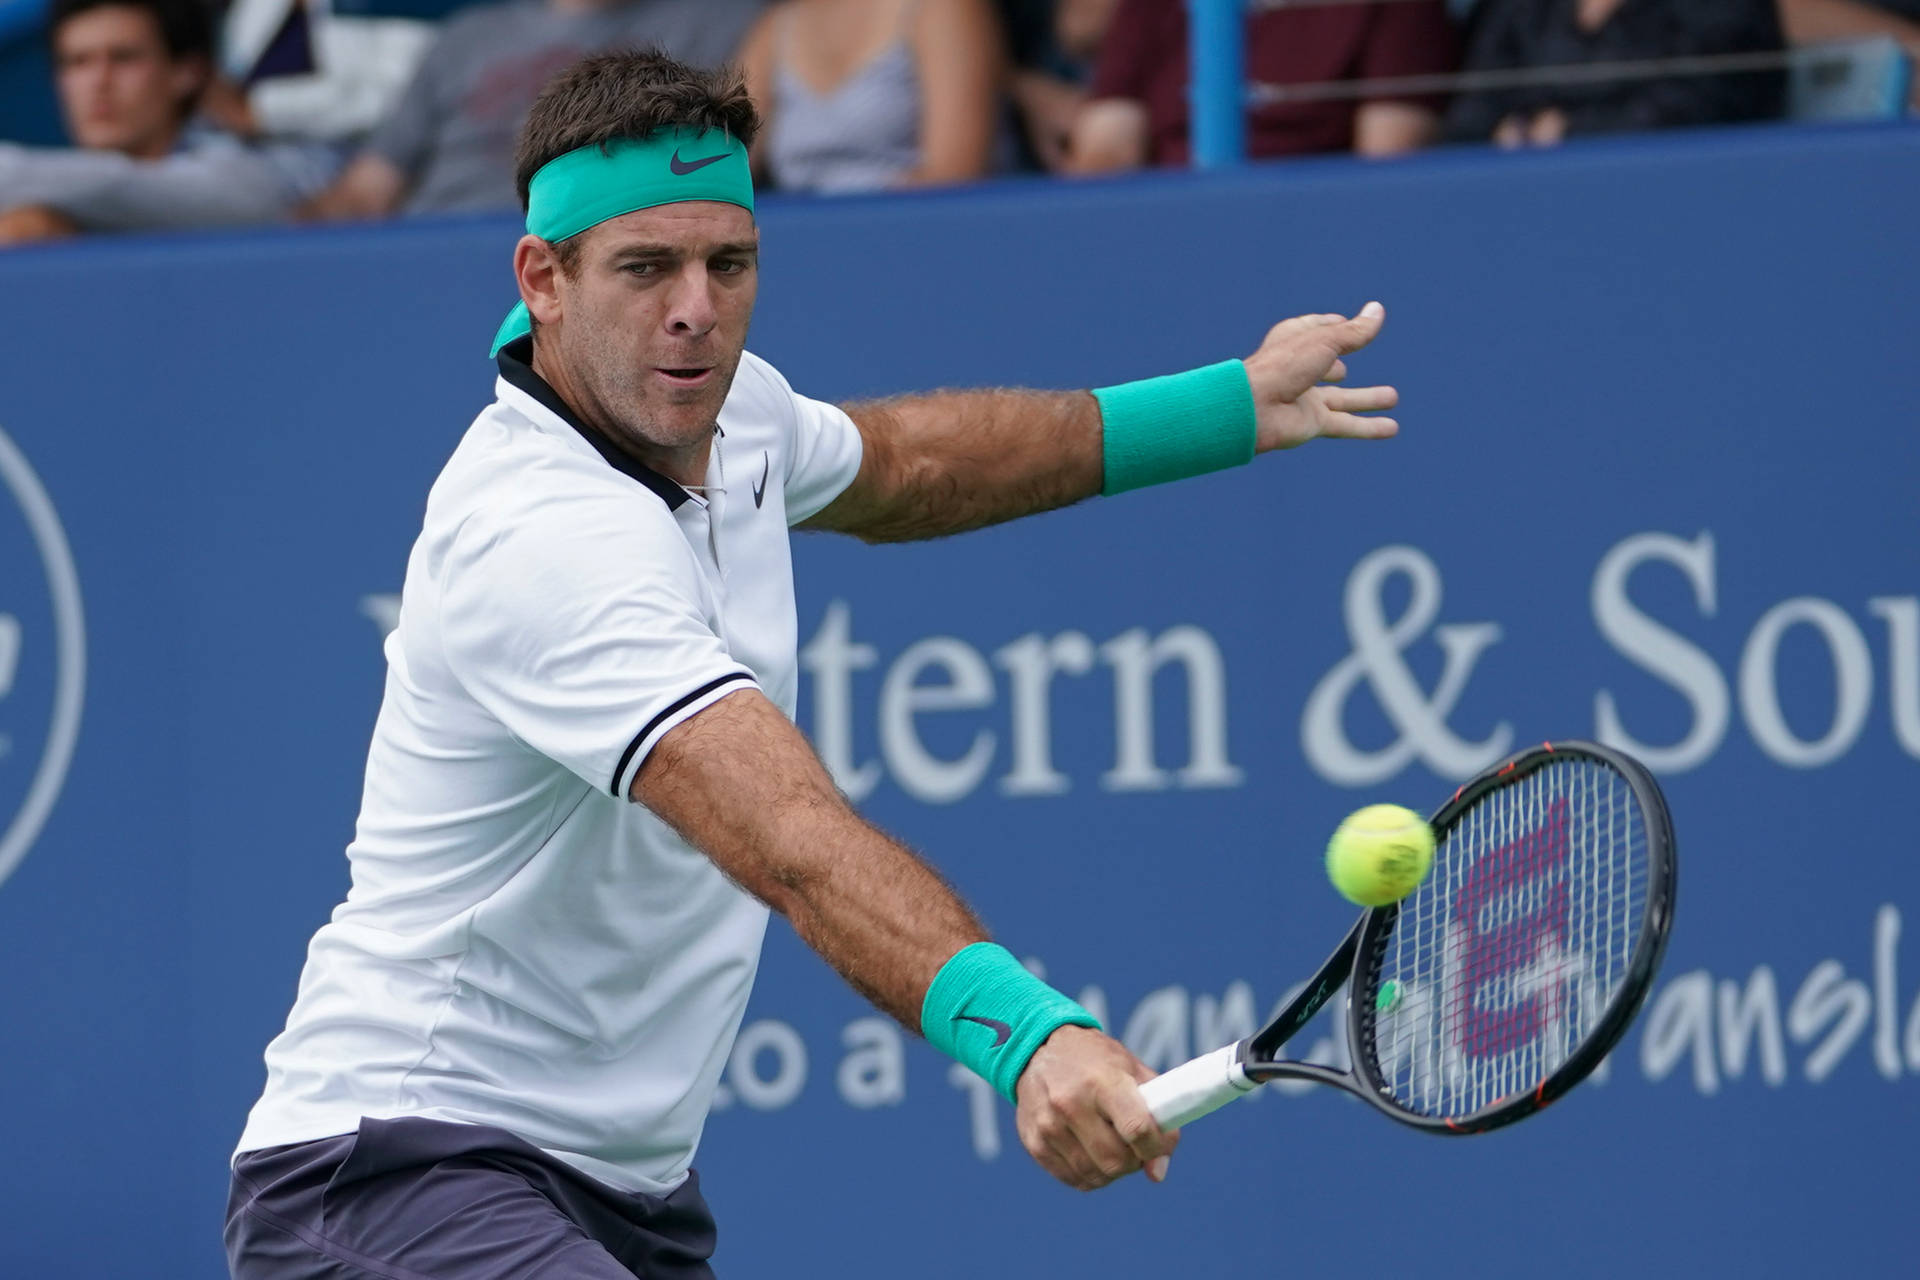 Juan Soto Catching Tennis Ball Background